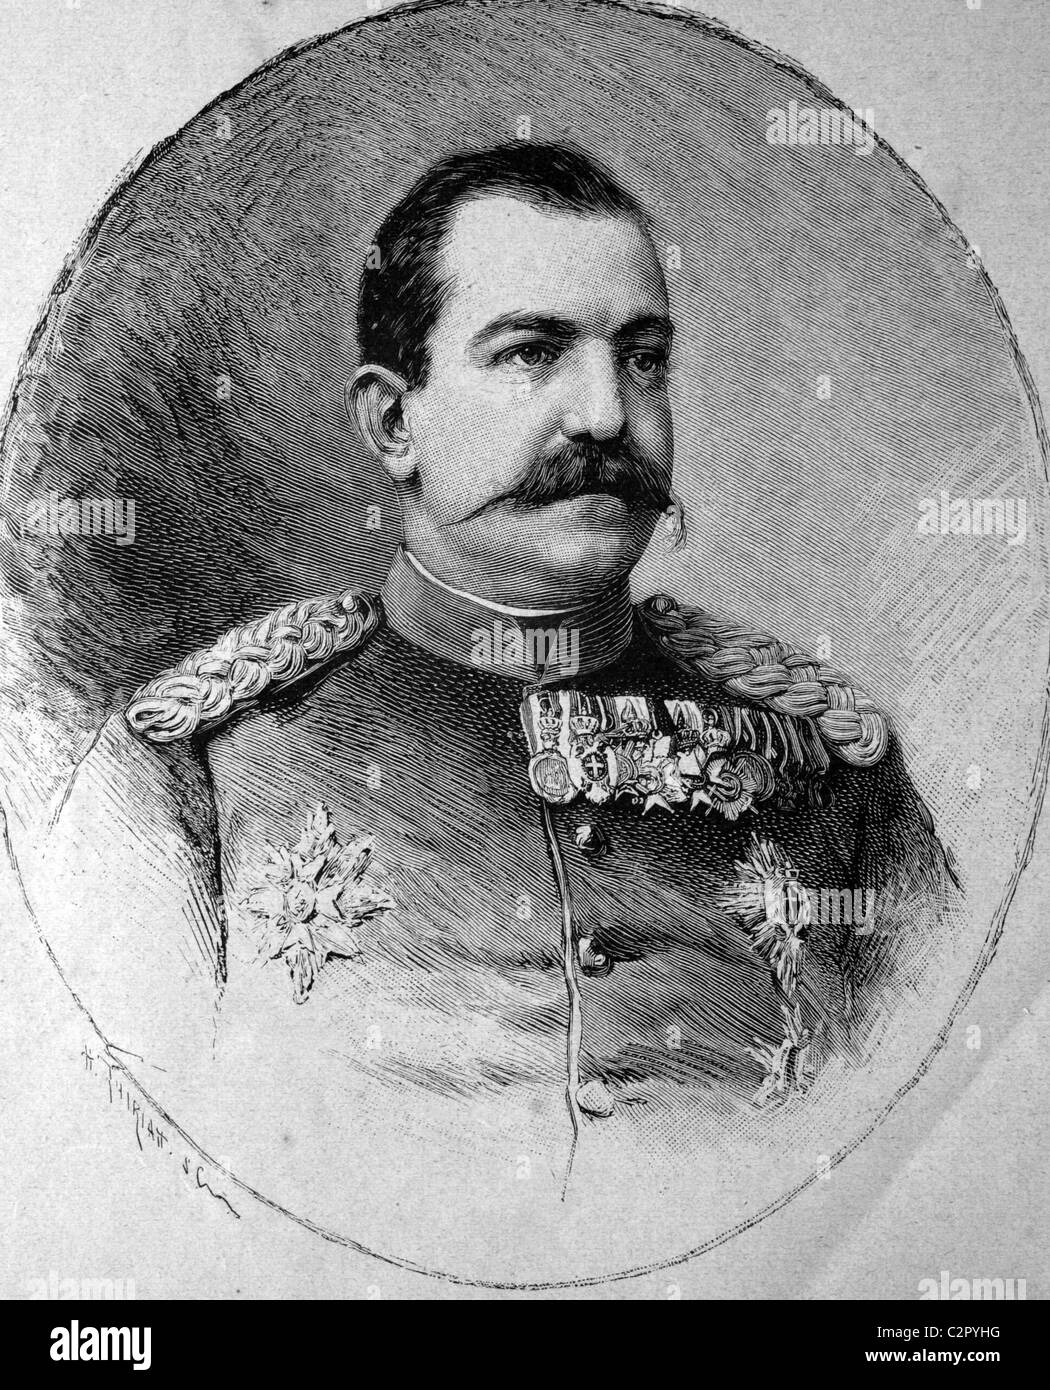 Milan I (1854-1901), King of Serbia, historical illustration, circa 1886 Stock Photo